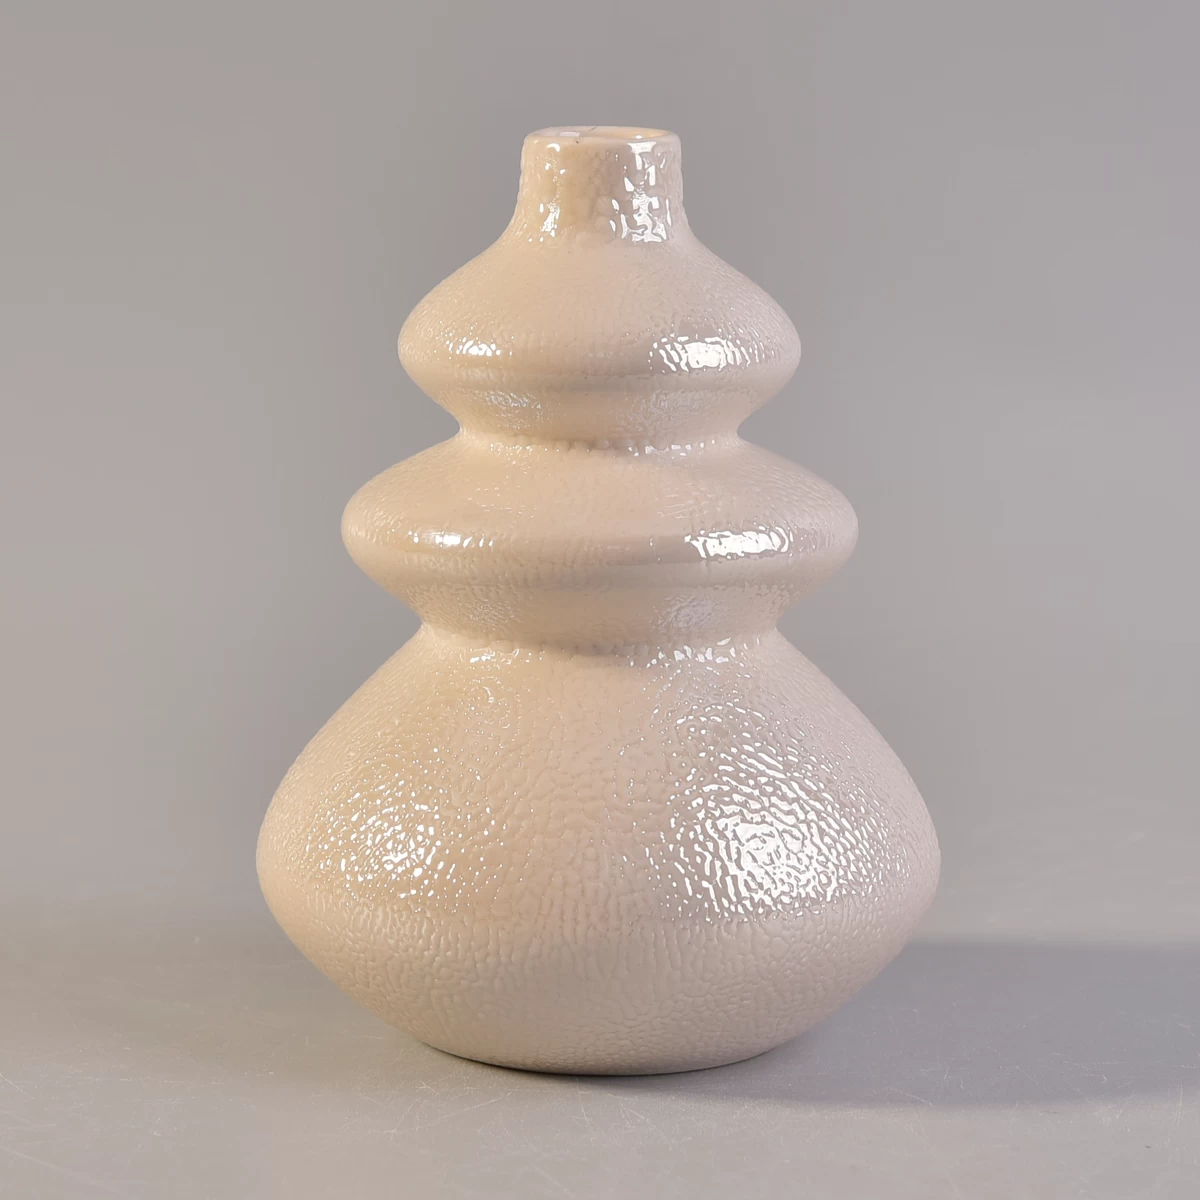 6 oz fl Pearl Glaze Plating Ceramic Oil Container Diffuser Bottle